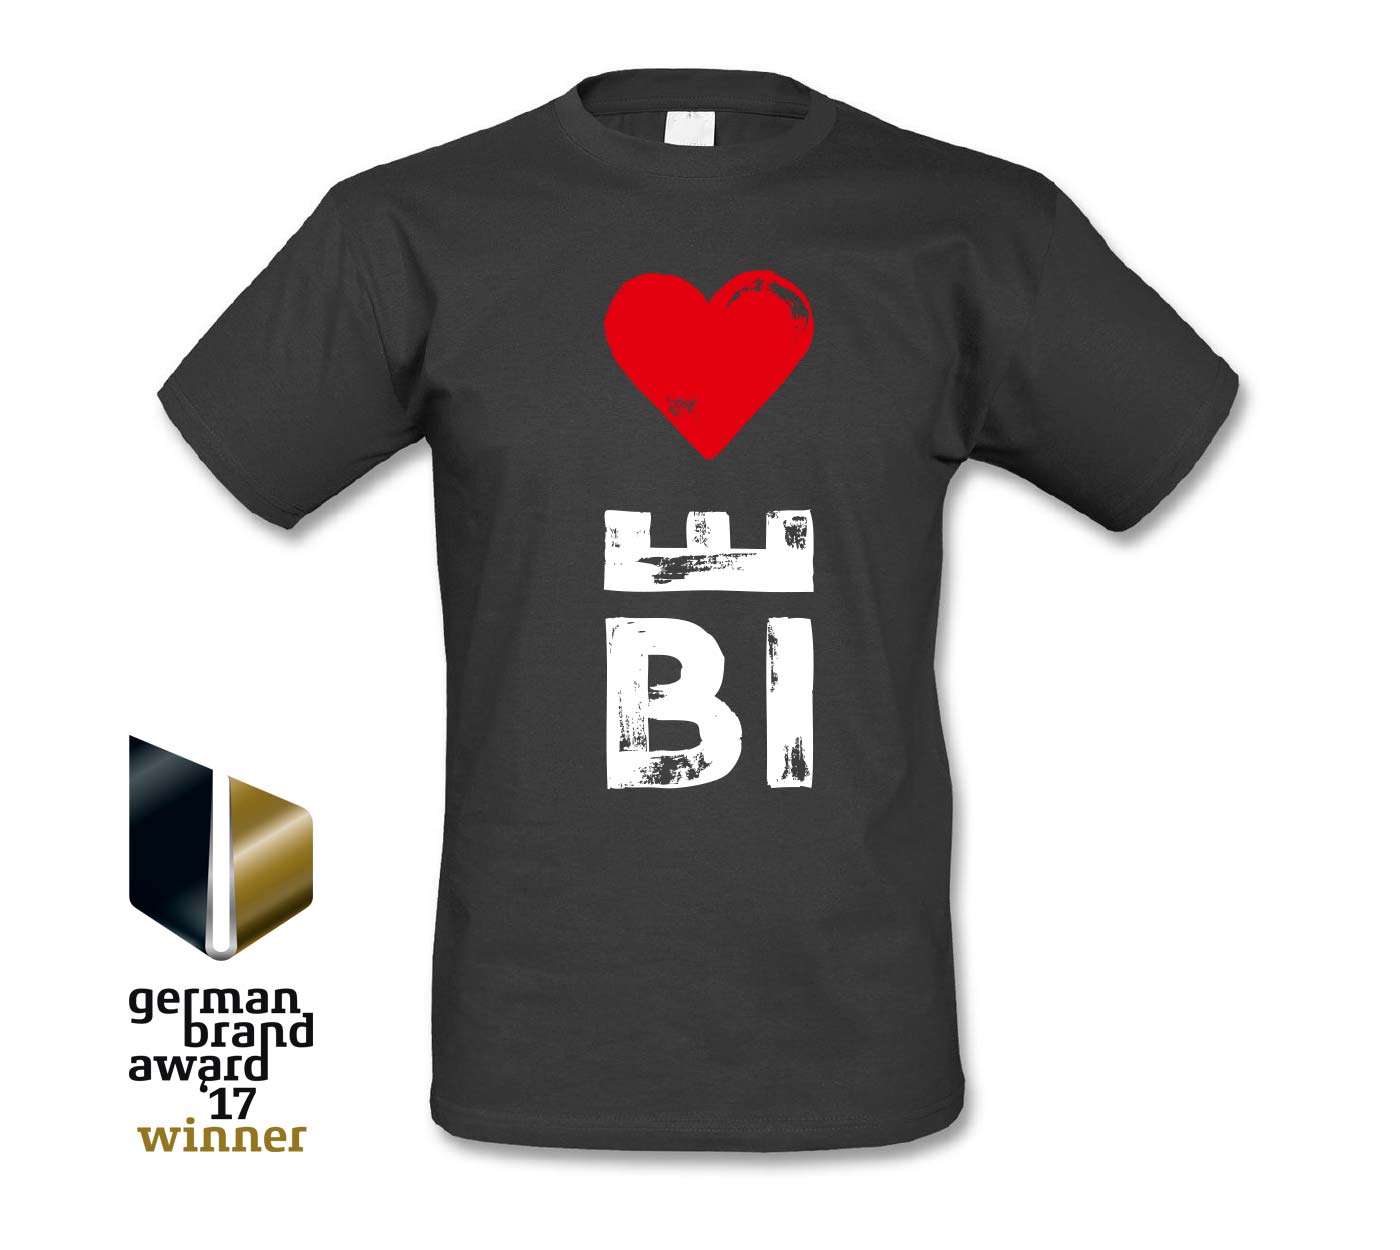 Stadt Bielefeld Corporate Design T-Shirt